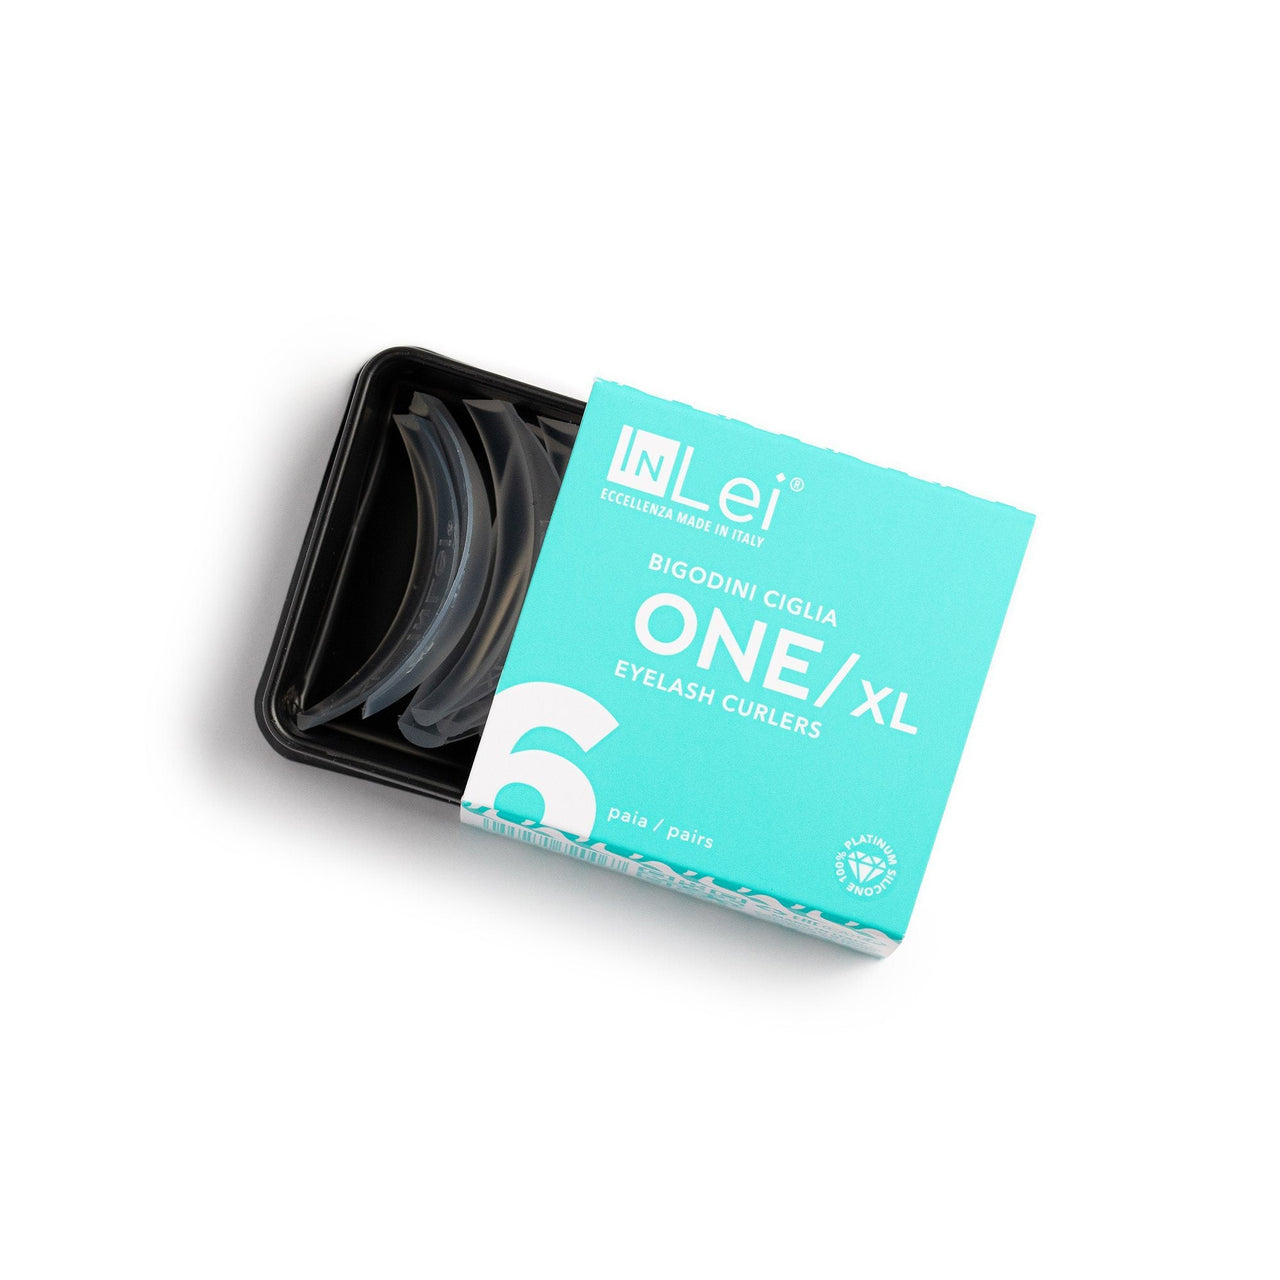 InLei® "ONE" - Silicone Shields Size XL